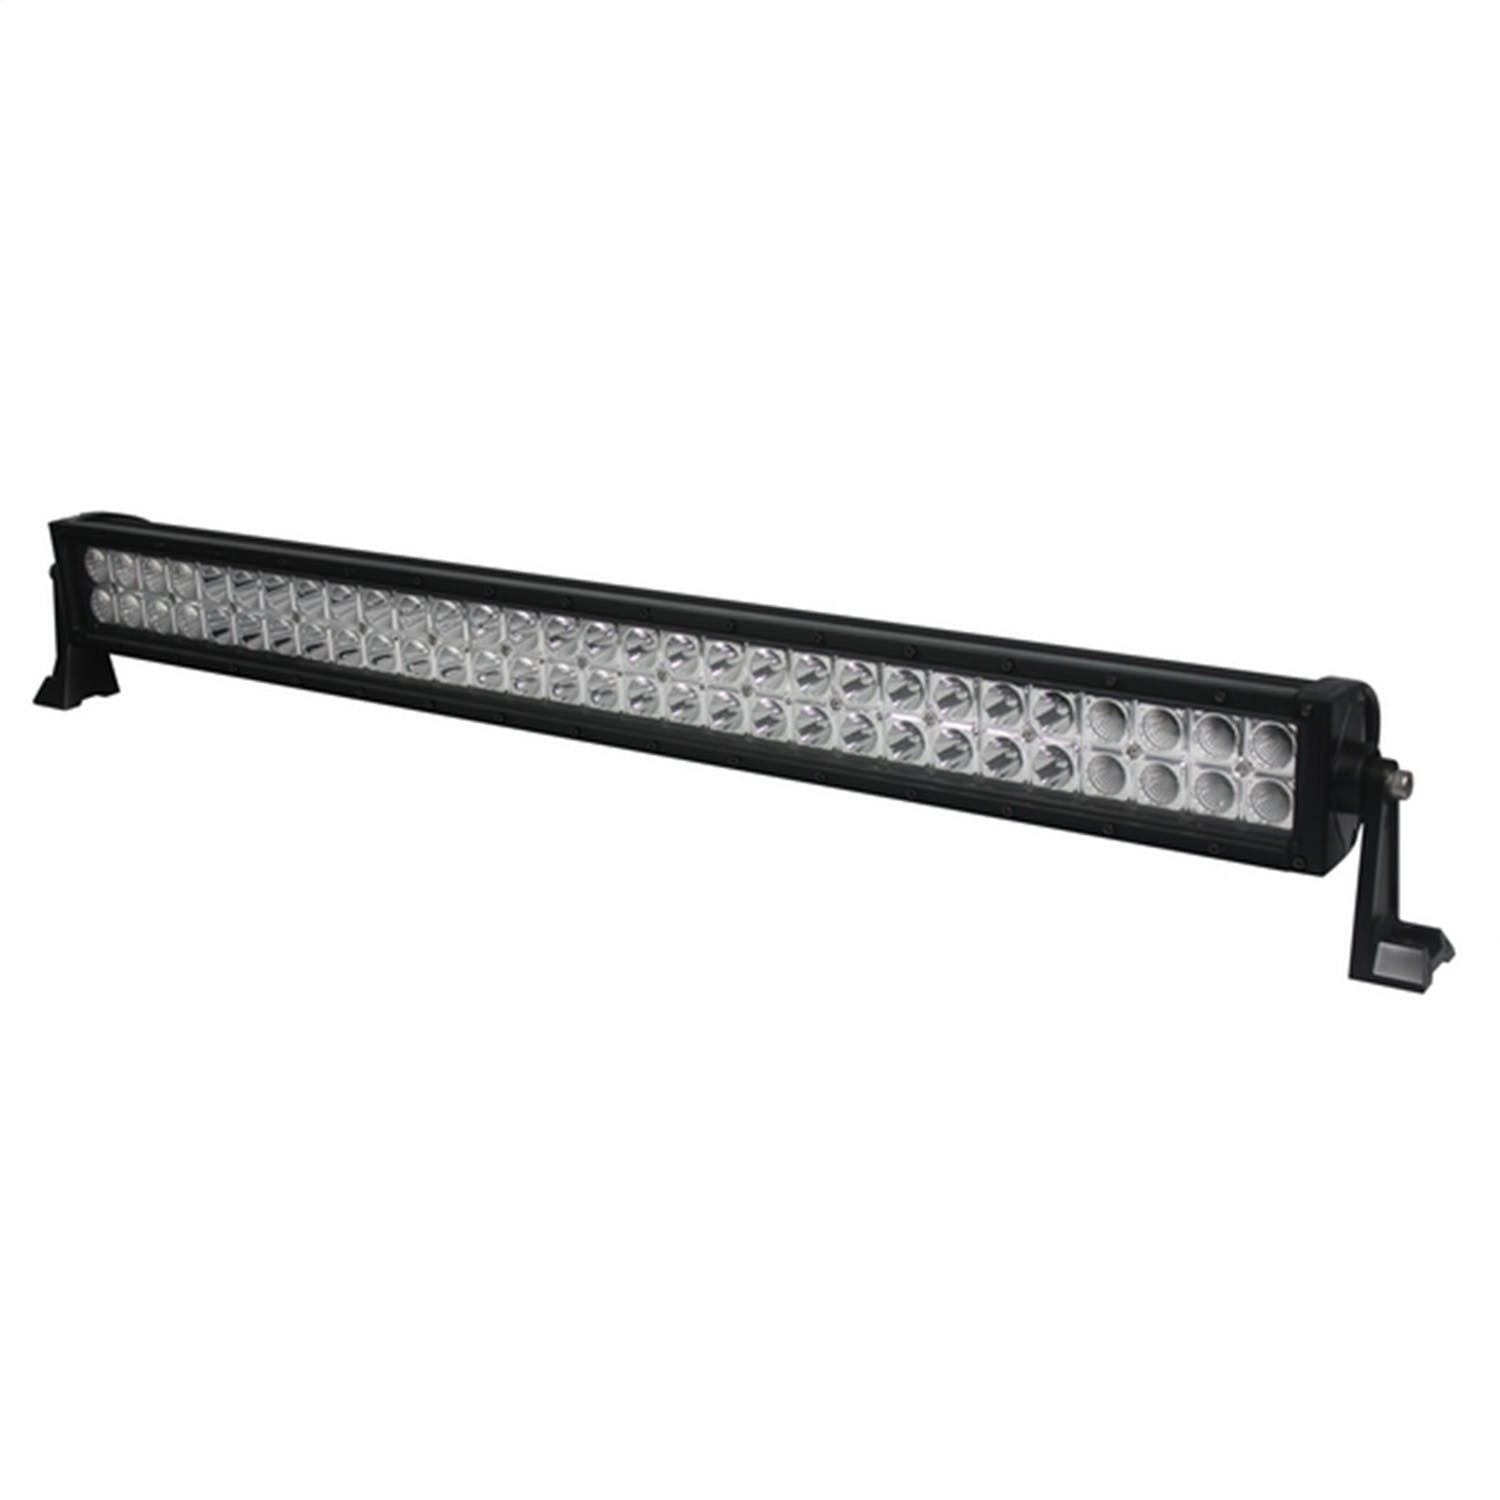 BrightSource 72030 Off-Road LED Light Bar